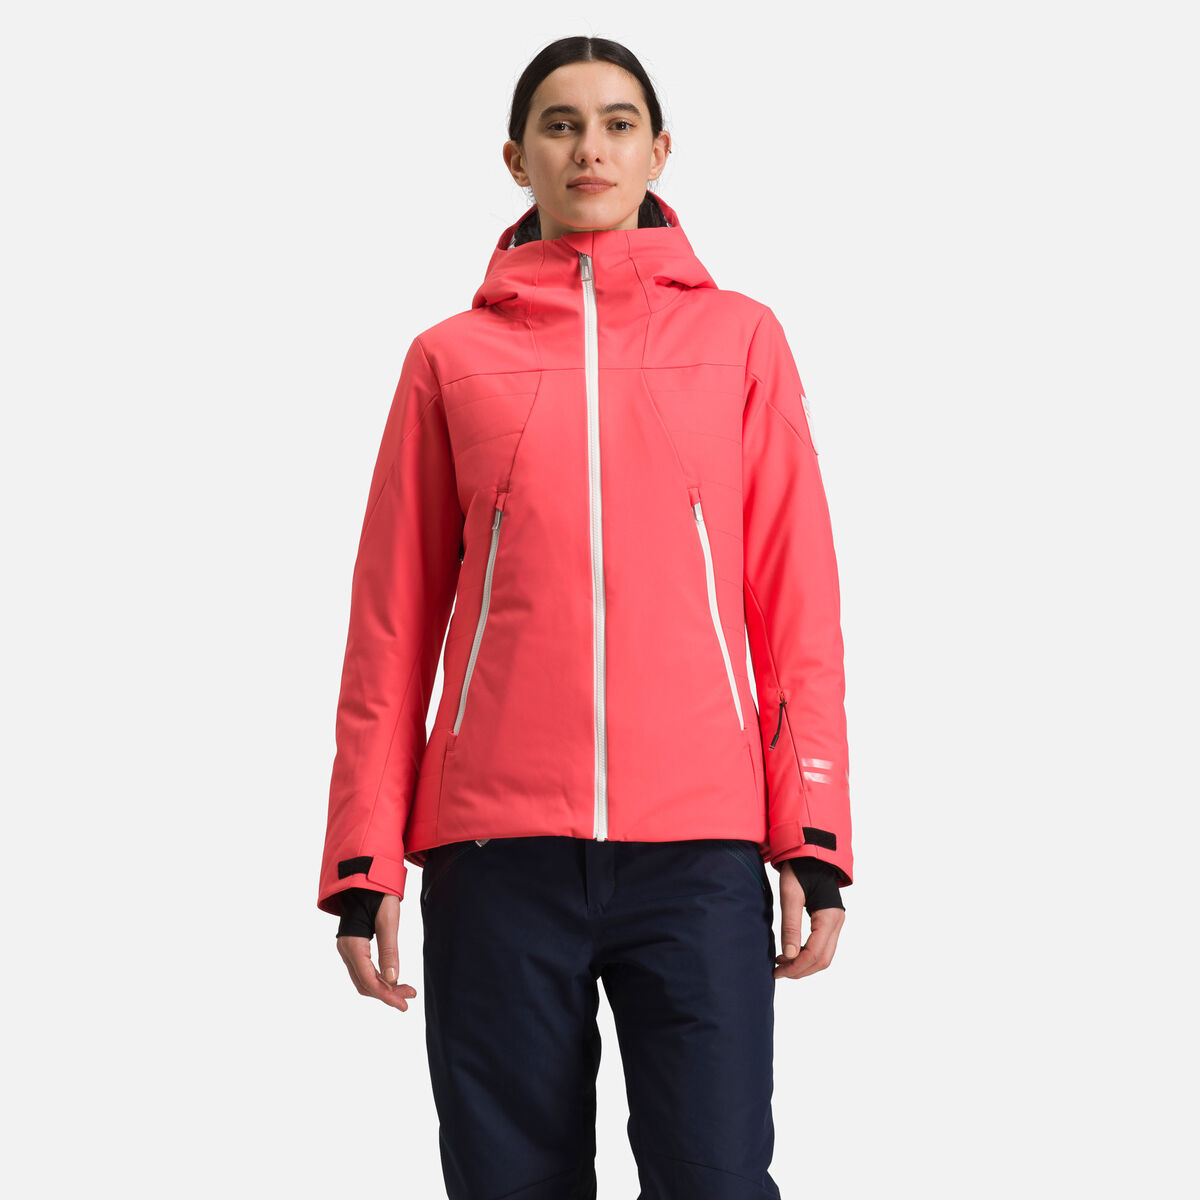 Rossignol Women's Fonction Ride Free Ski Jacket | Jackets Women | Rossignol